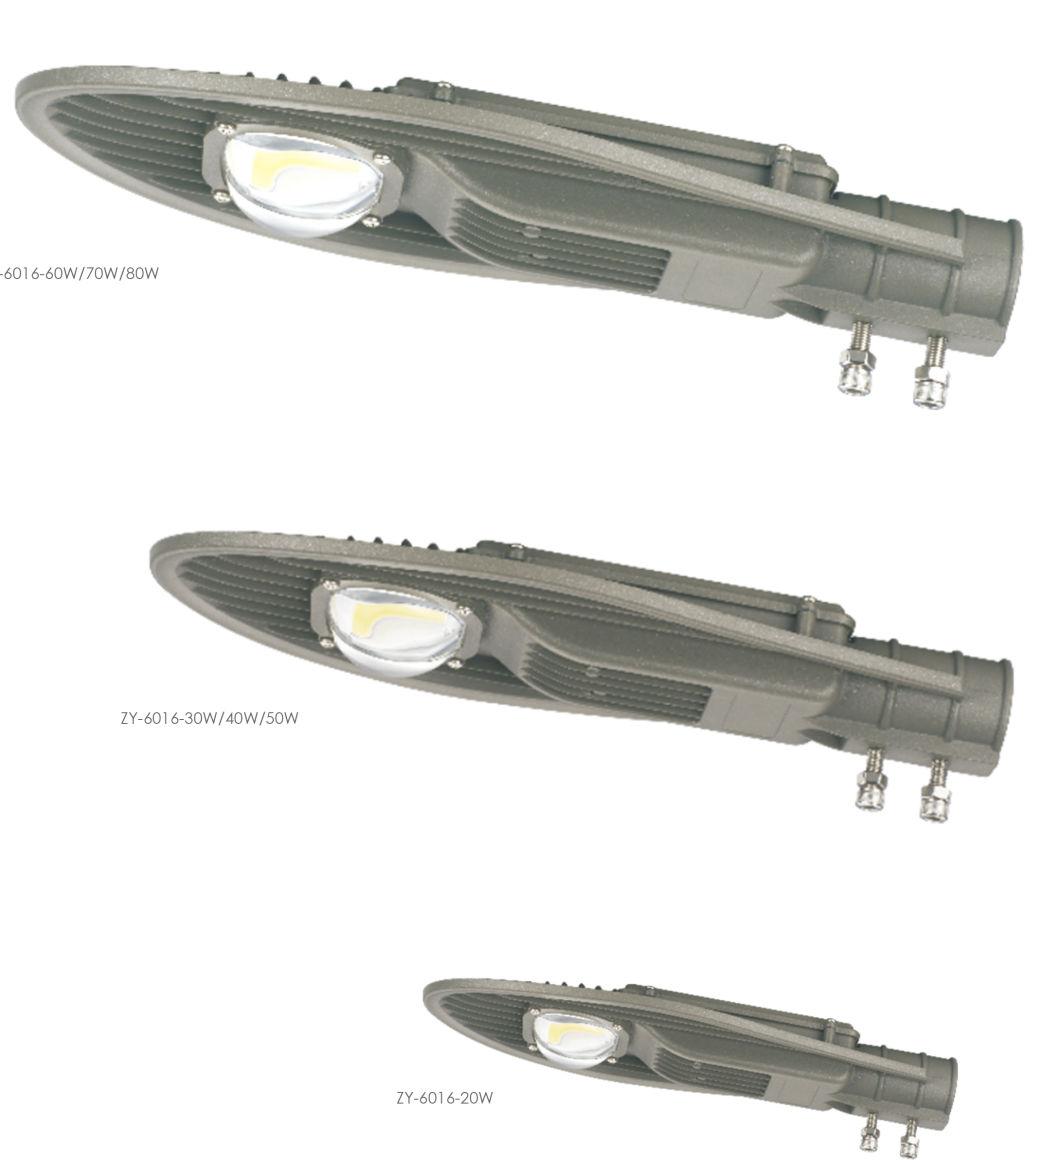 Super Bright Meanwell Driver Modular LED Street Light 20W-280W